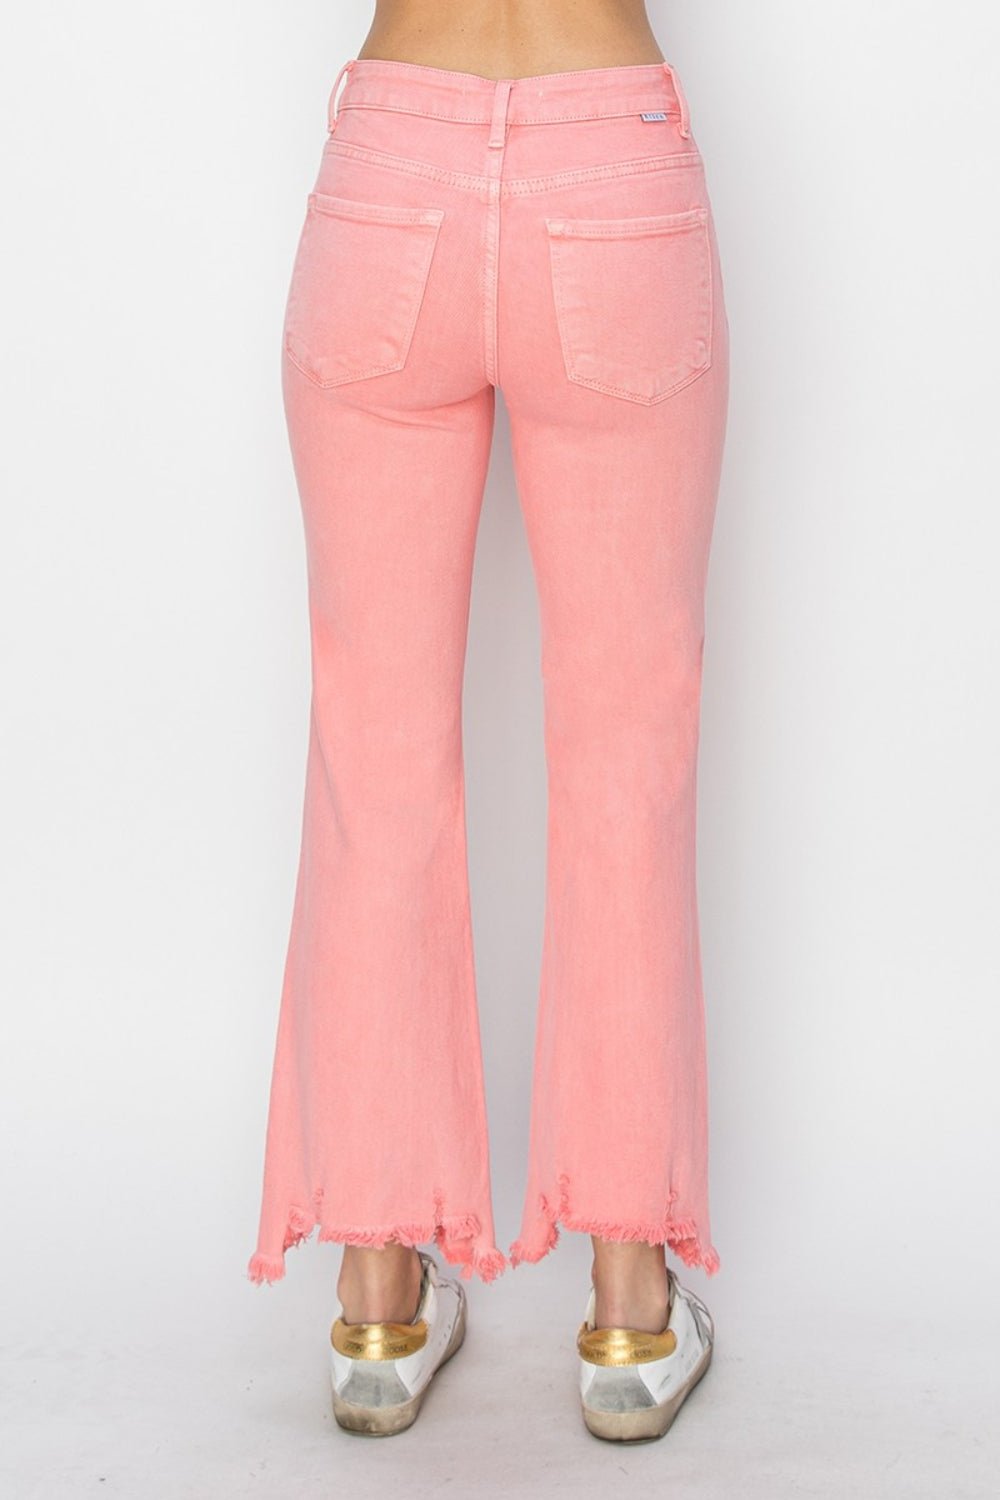 Raw Hem Bootcut Jeans in FlamingoJeansRISEN